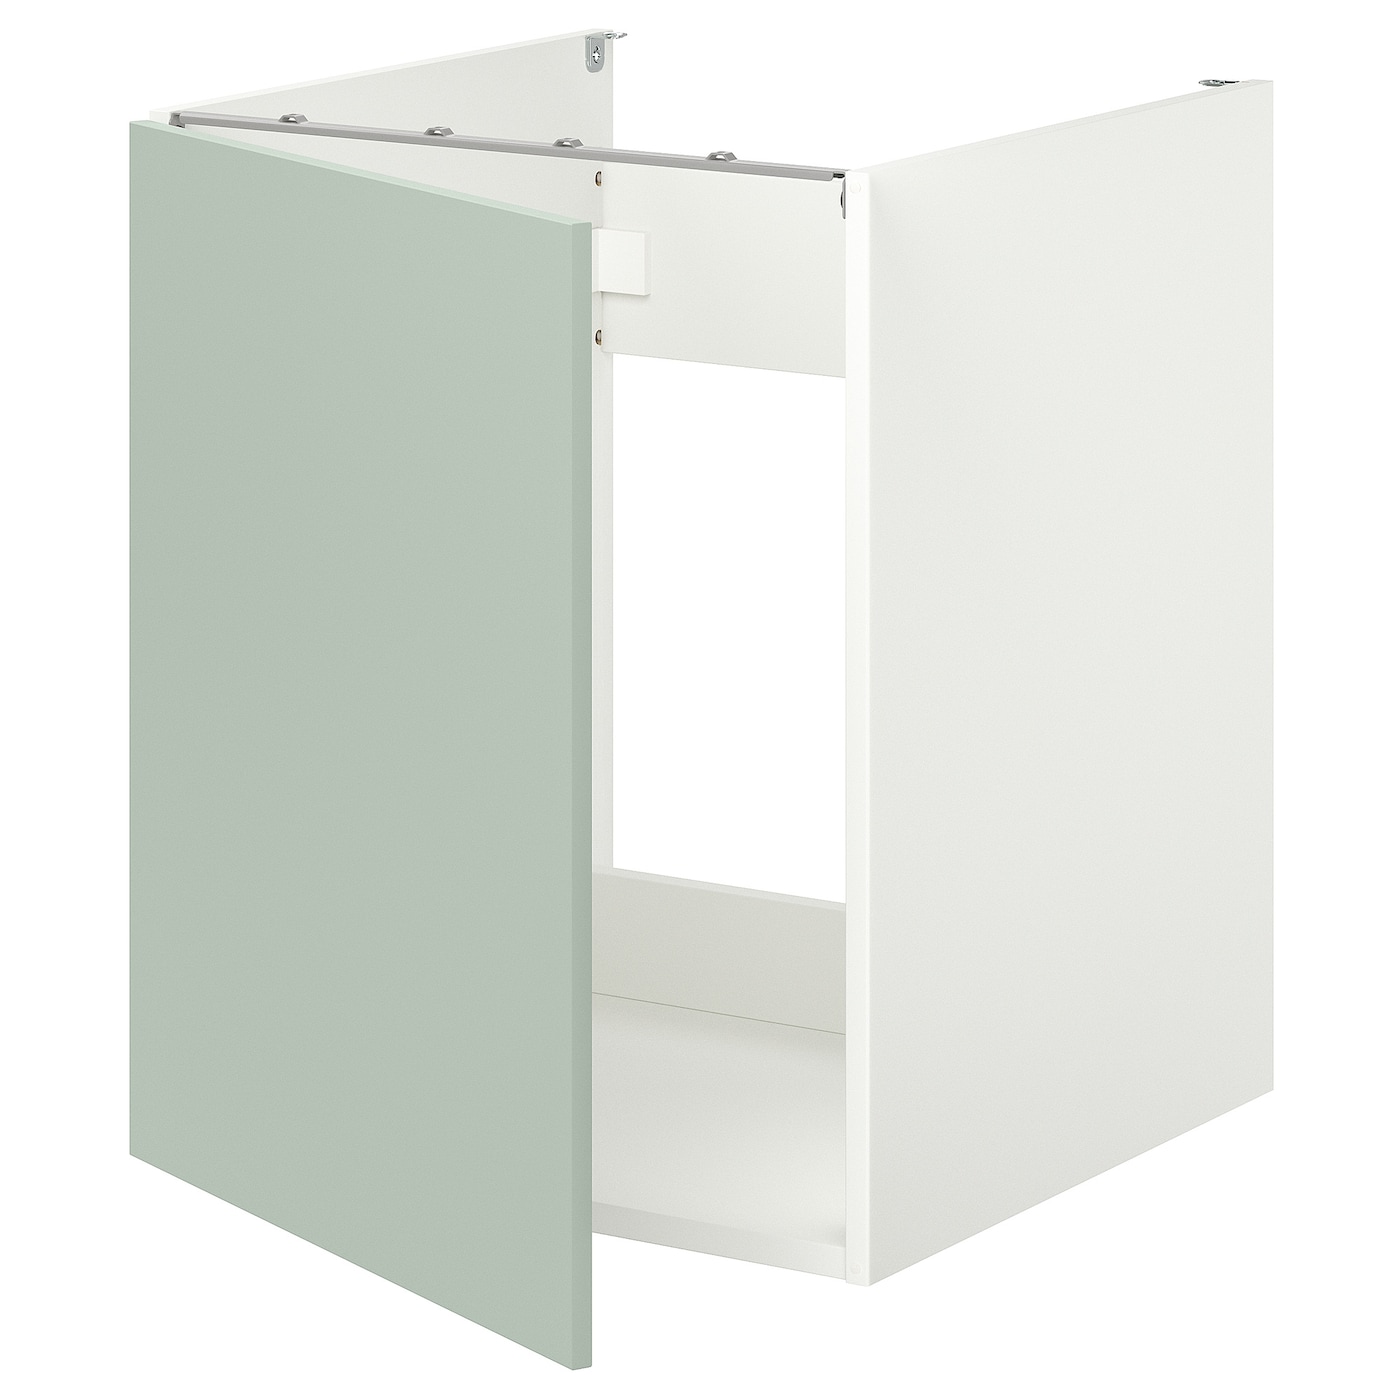 Раковина/дверной шкаф - ENHET  IKEA/ ЭНХЕТ ИКЕА, 75х62х60  см, белый/зеленый